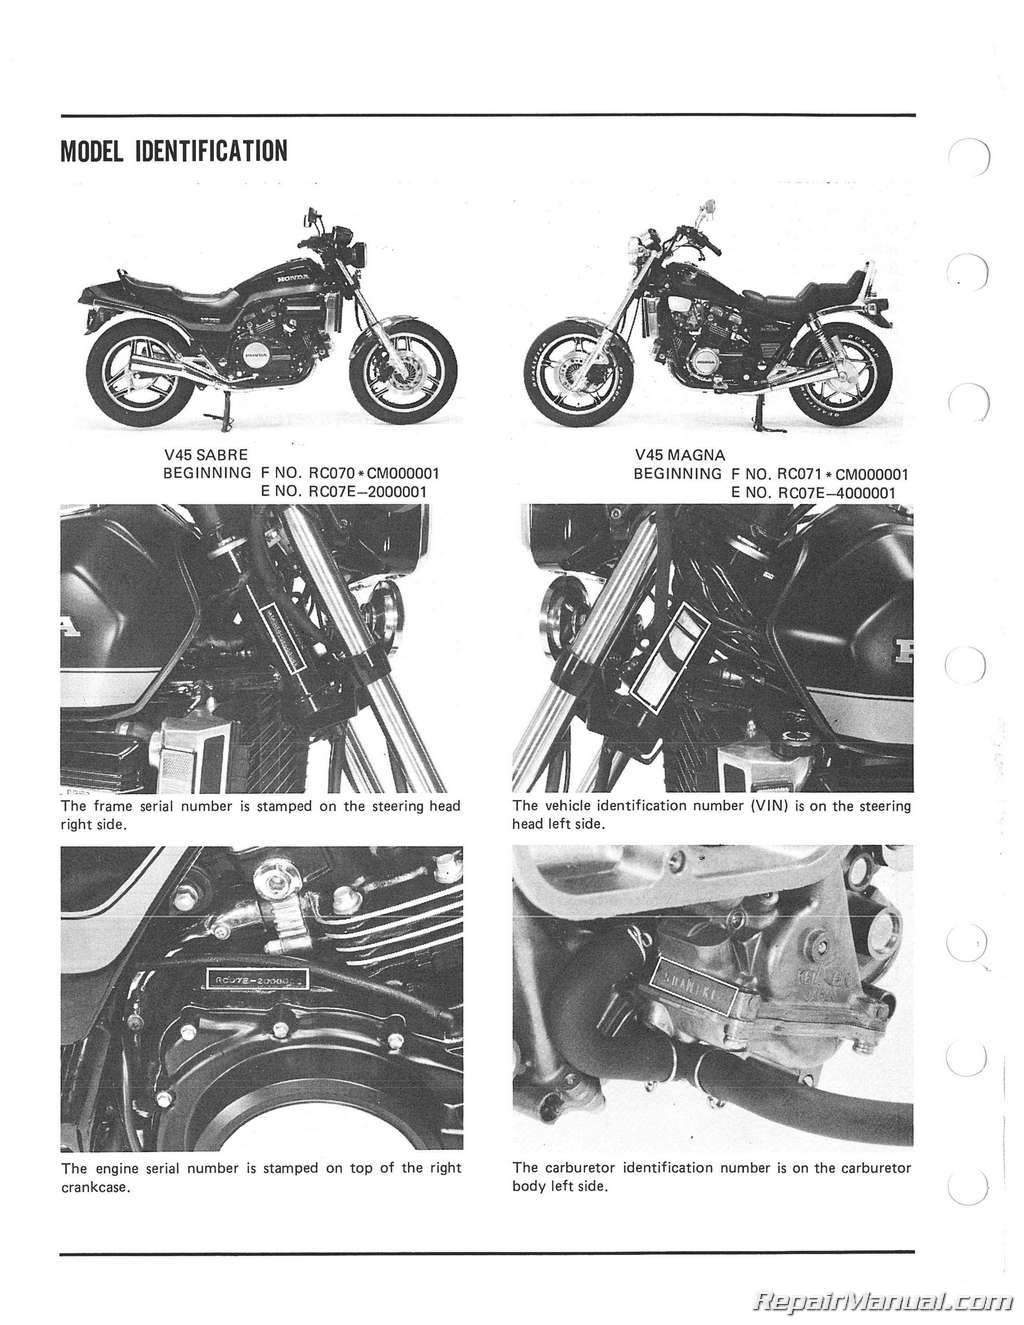 1984 Honda vf700c service manual #3